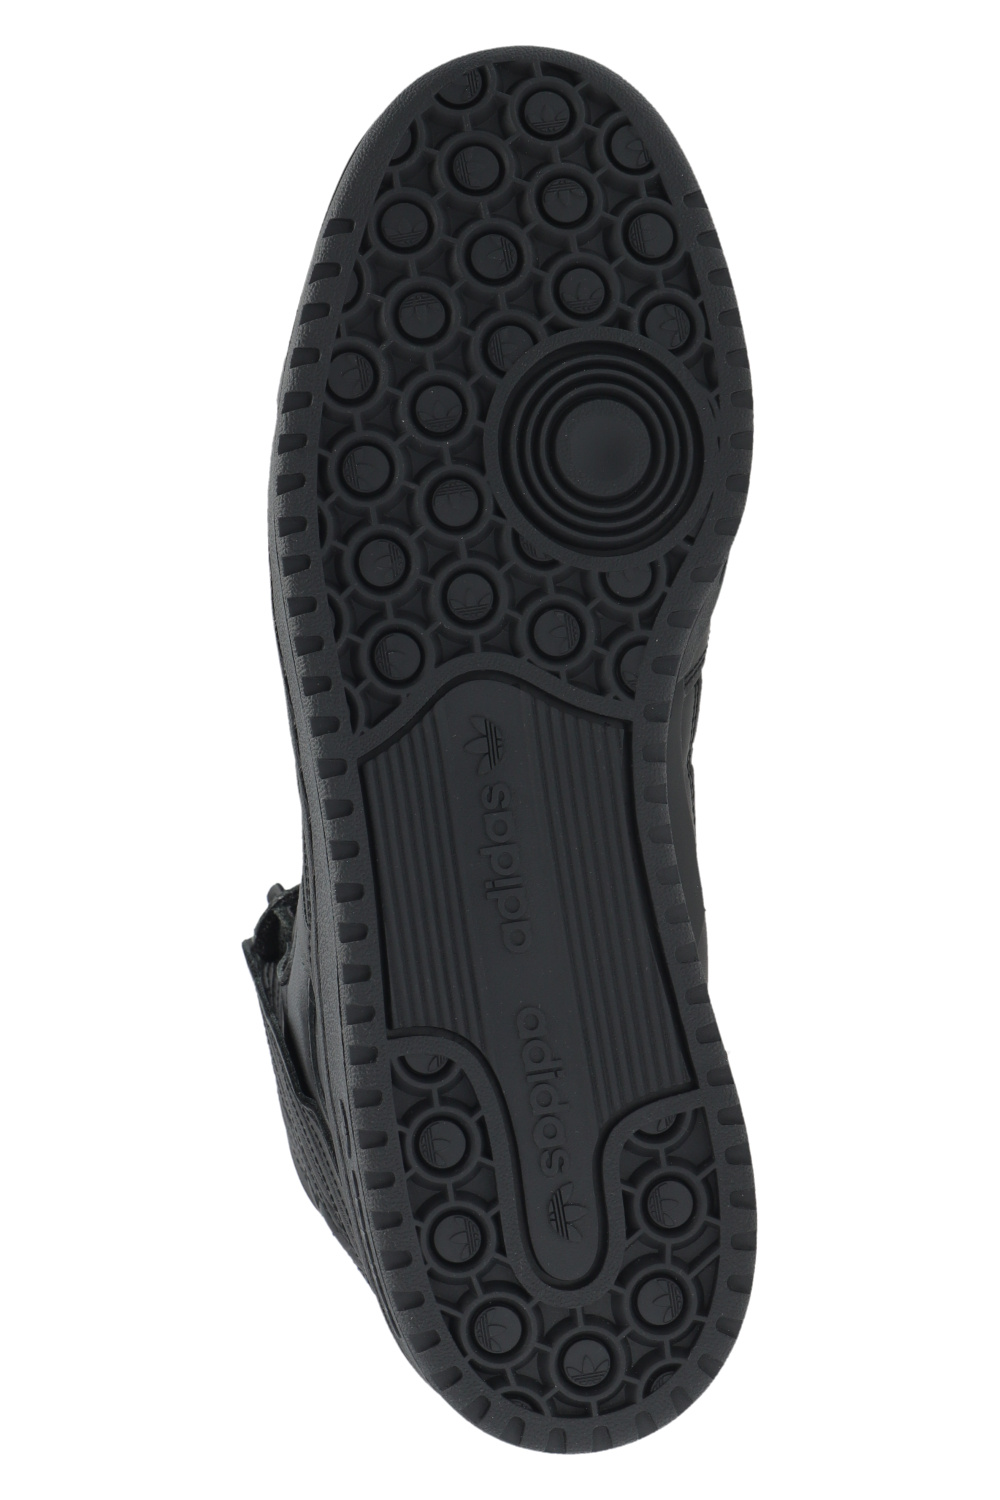 ADIDAS Originals adidas padel Adipower 3.1 Padel Racket Junior